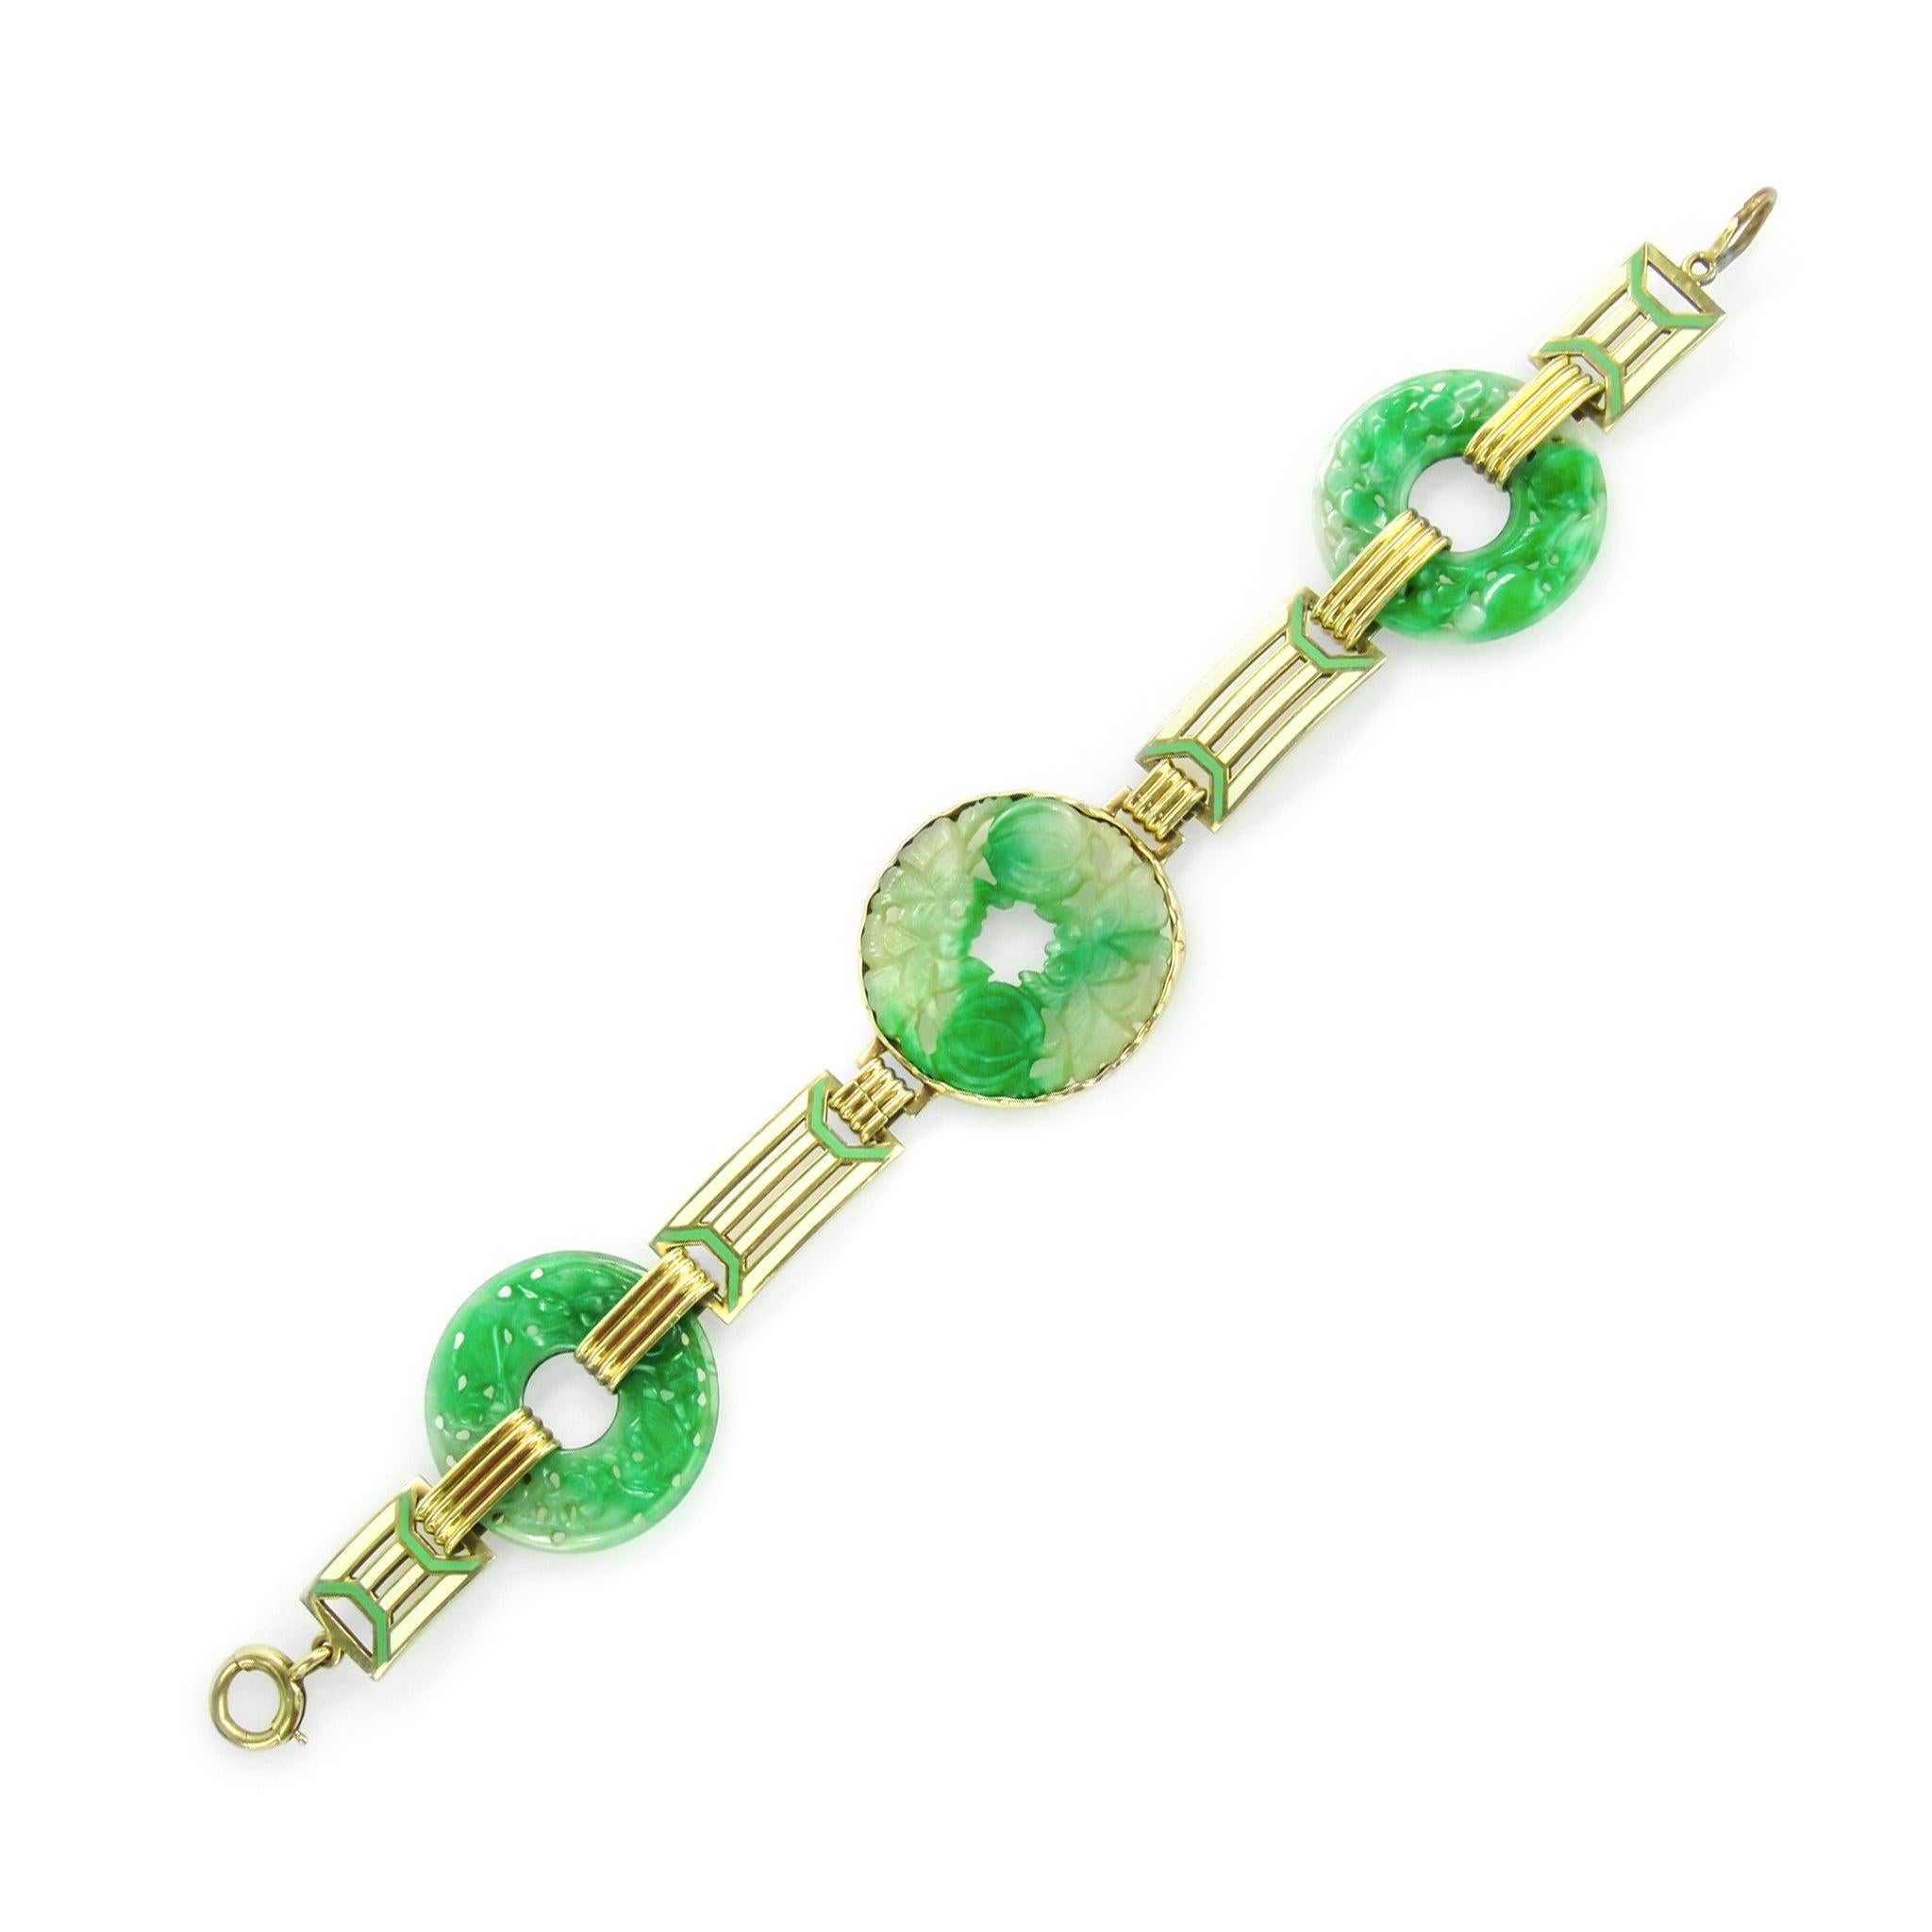 14k Art Deco Jade and Enamel Link Bracelet by Wordley, Allsopp & Bliss In Good Condition For Sale In Hummelstown, PA